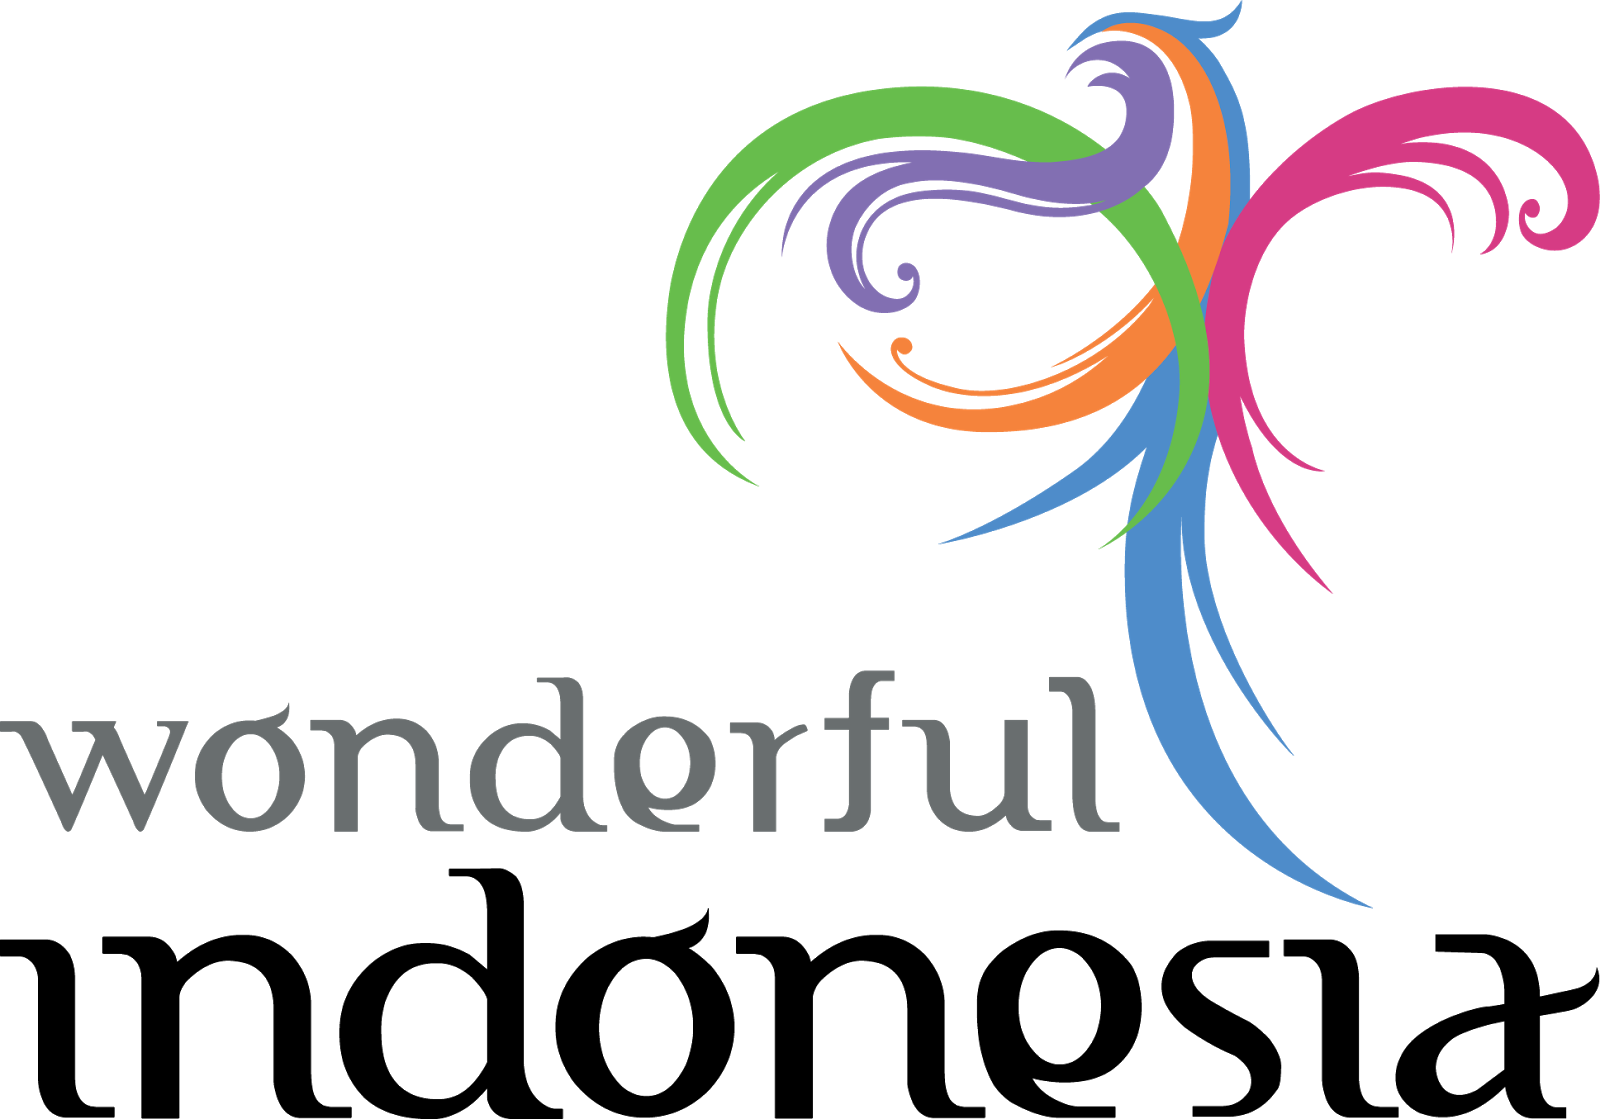  Wonderful Indonesia  Makna kata dan logo Wonderful Indonesia 